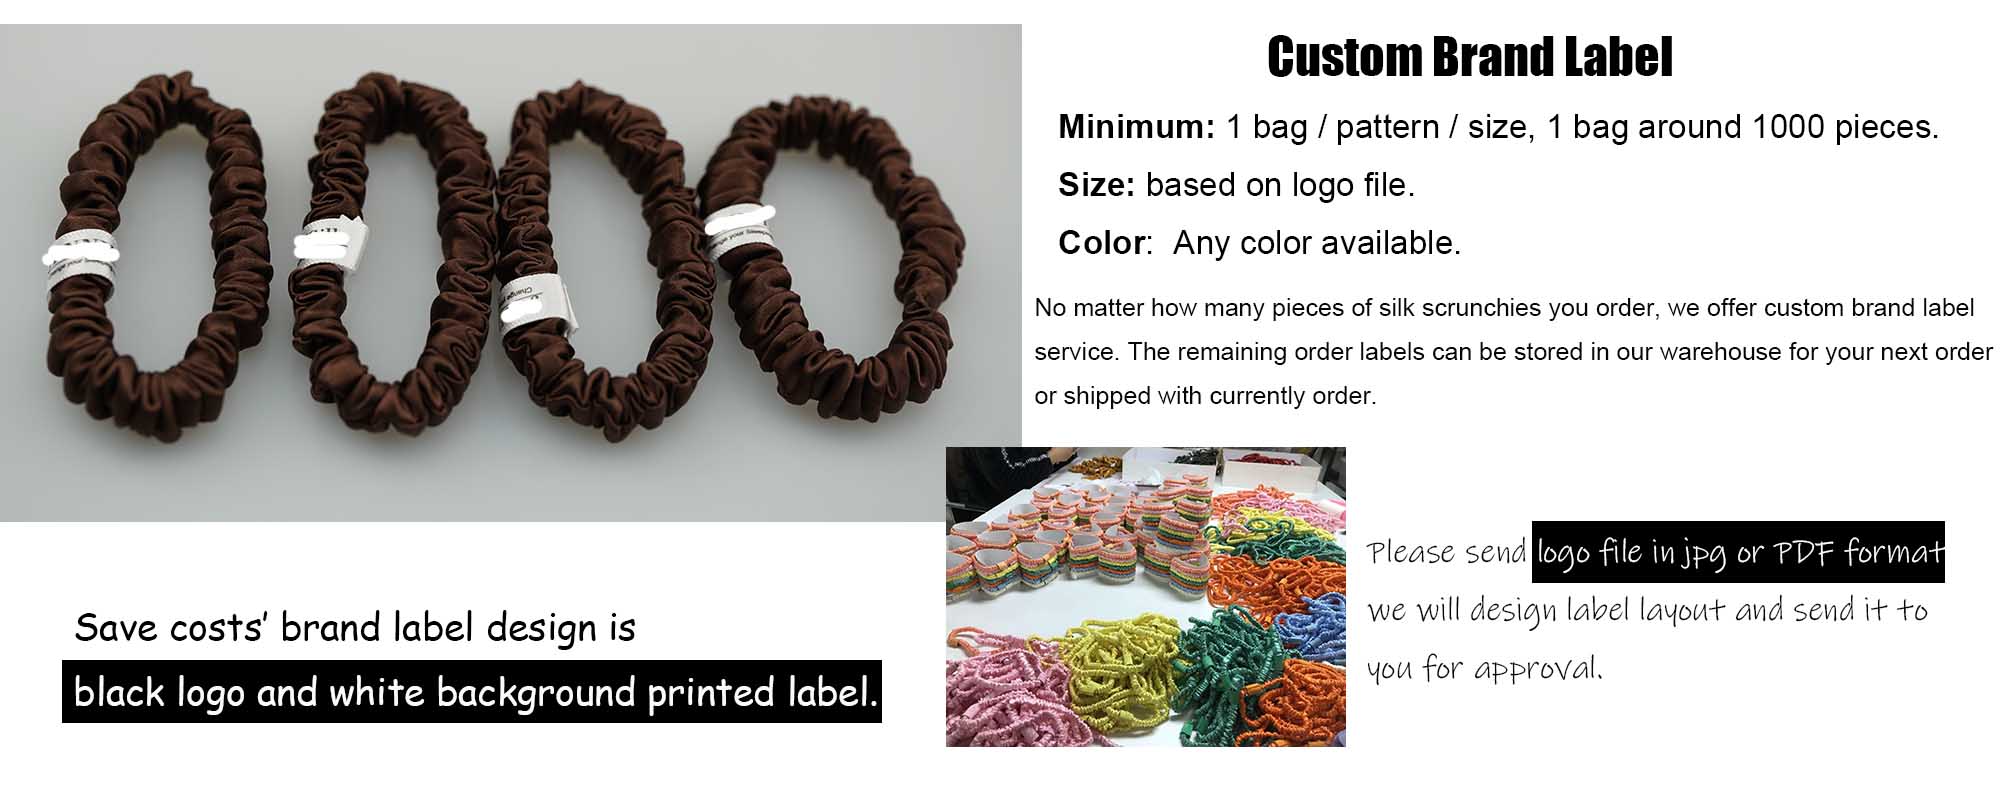 custom brand label on silk scrunchies